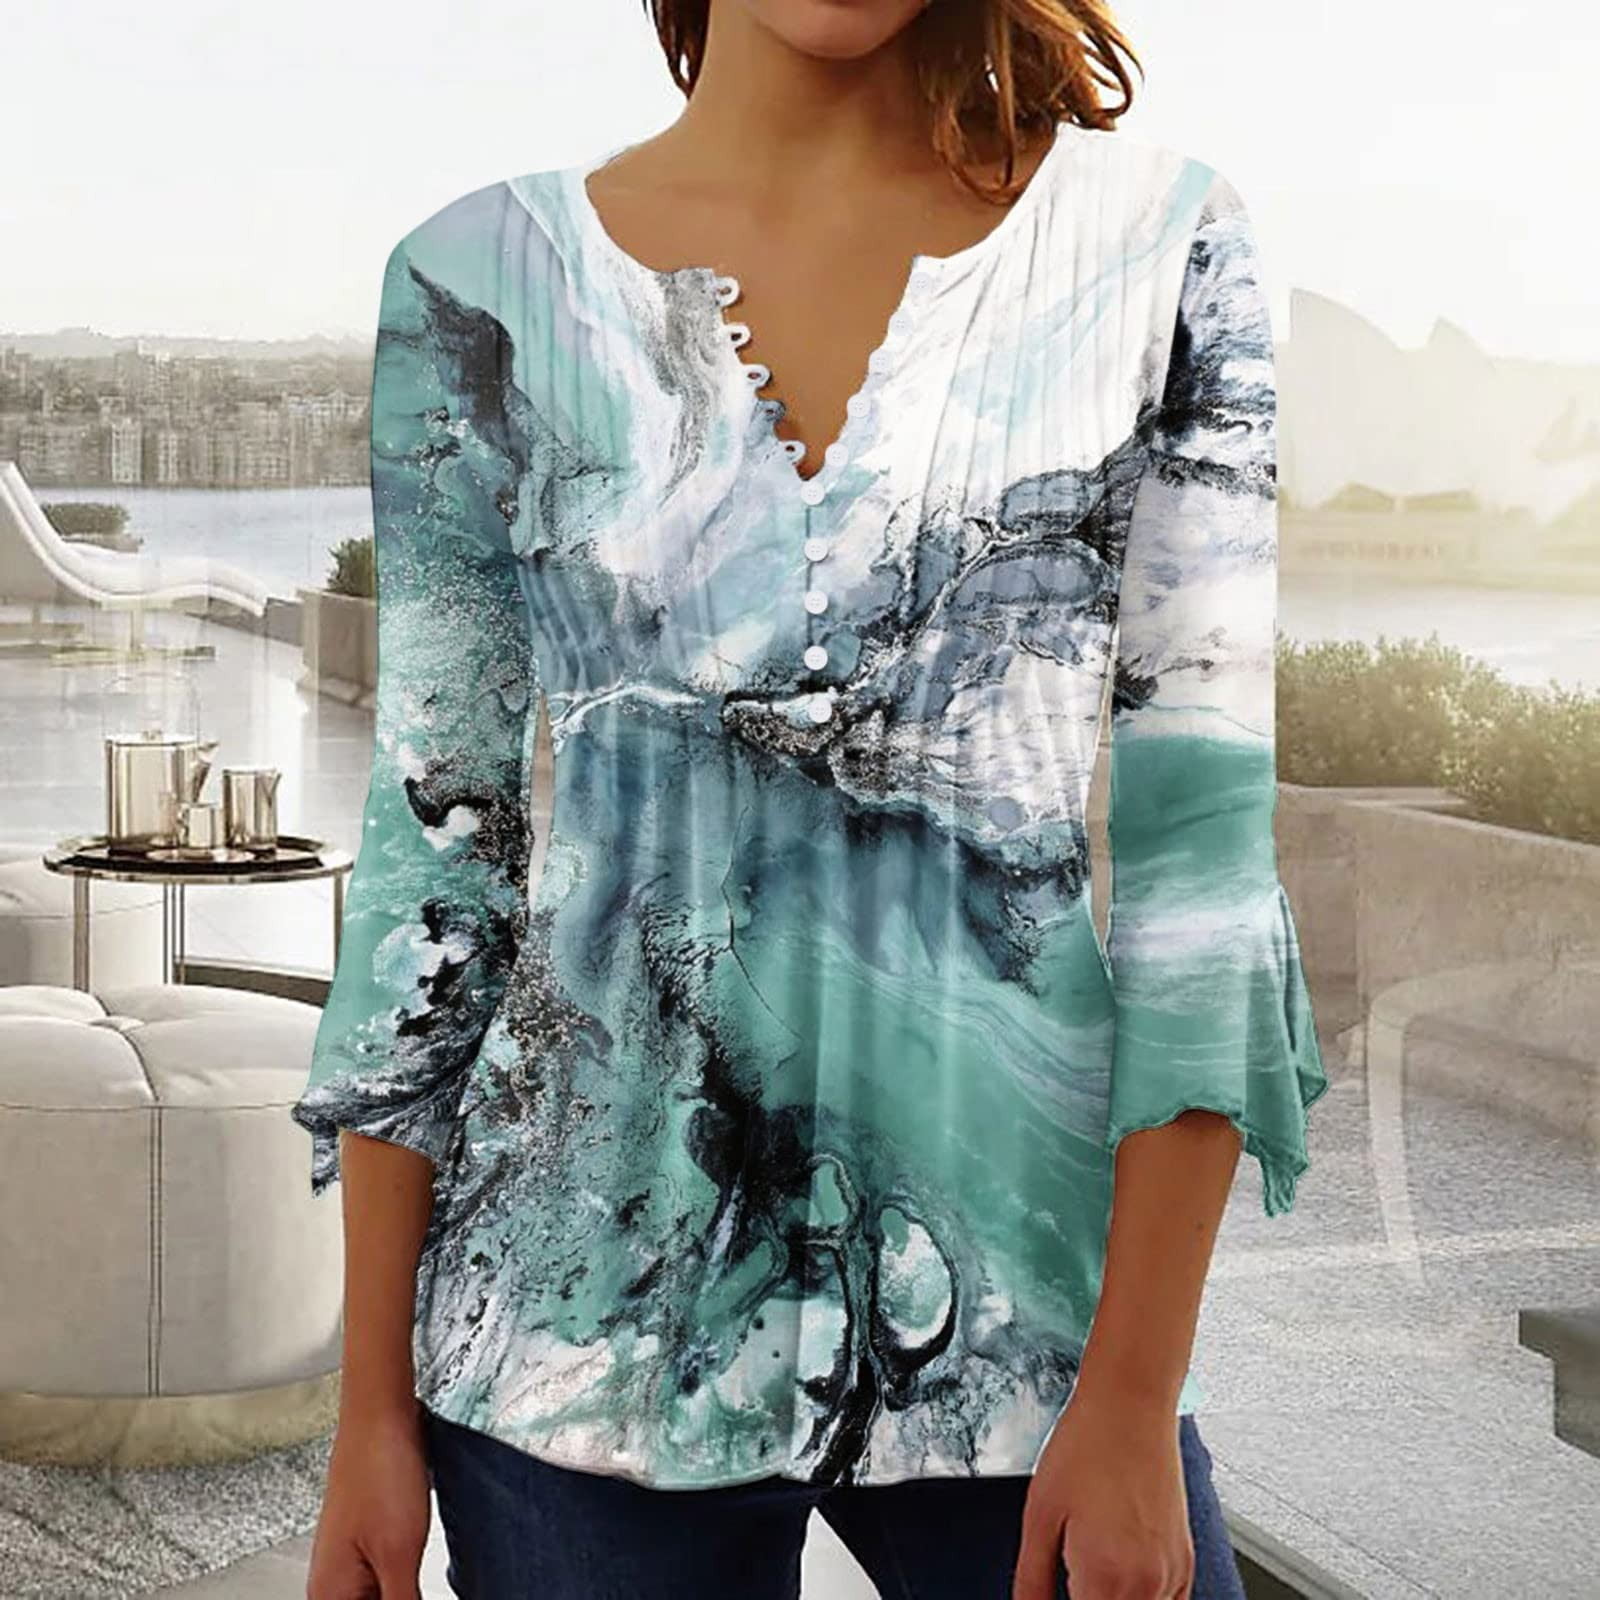 Hanas Womens Summer Tops Floral Print Blouses Neck Casual Boho for Women Short Sleeve Loose T Shirt - Walmart.com